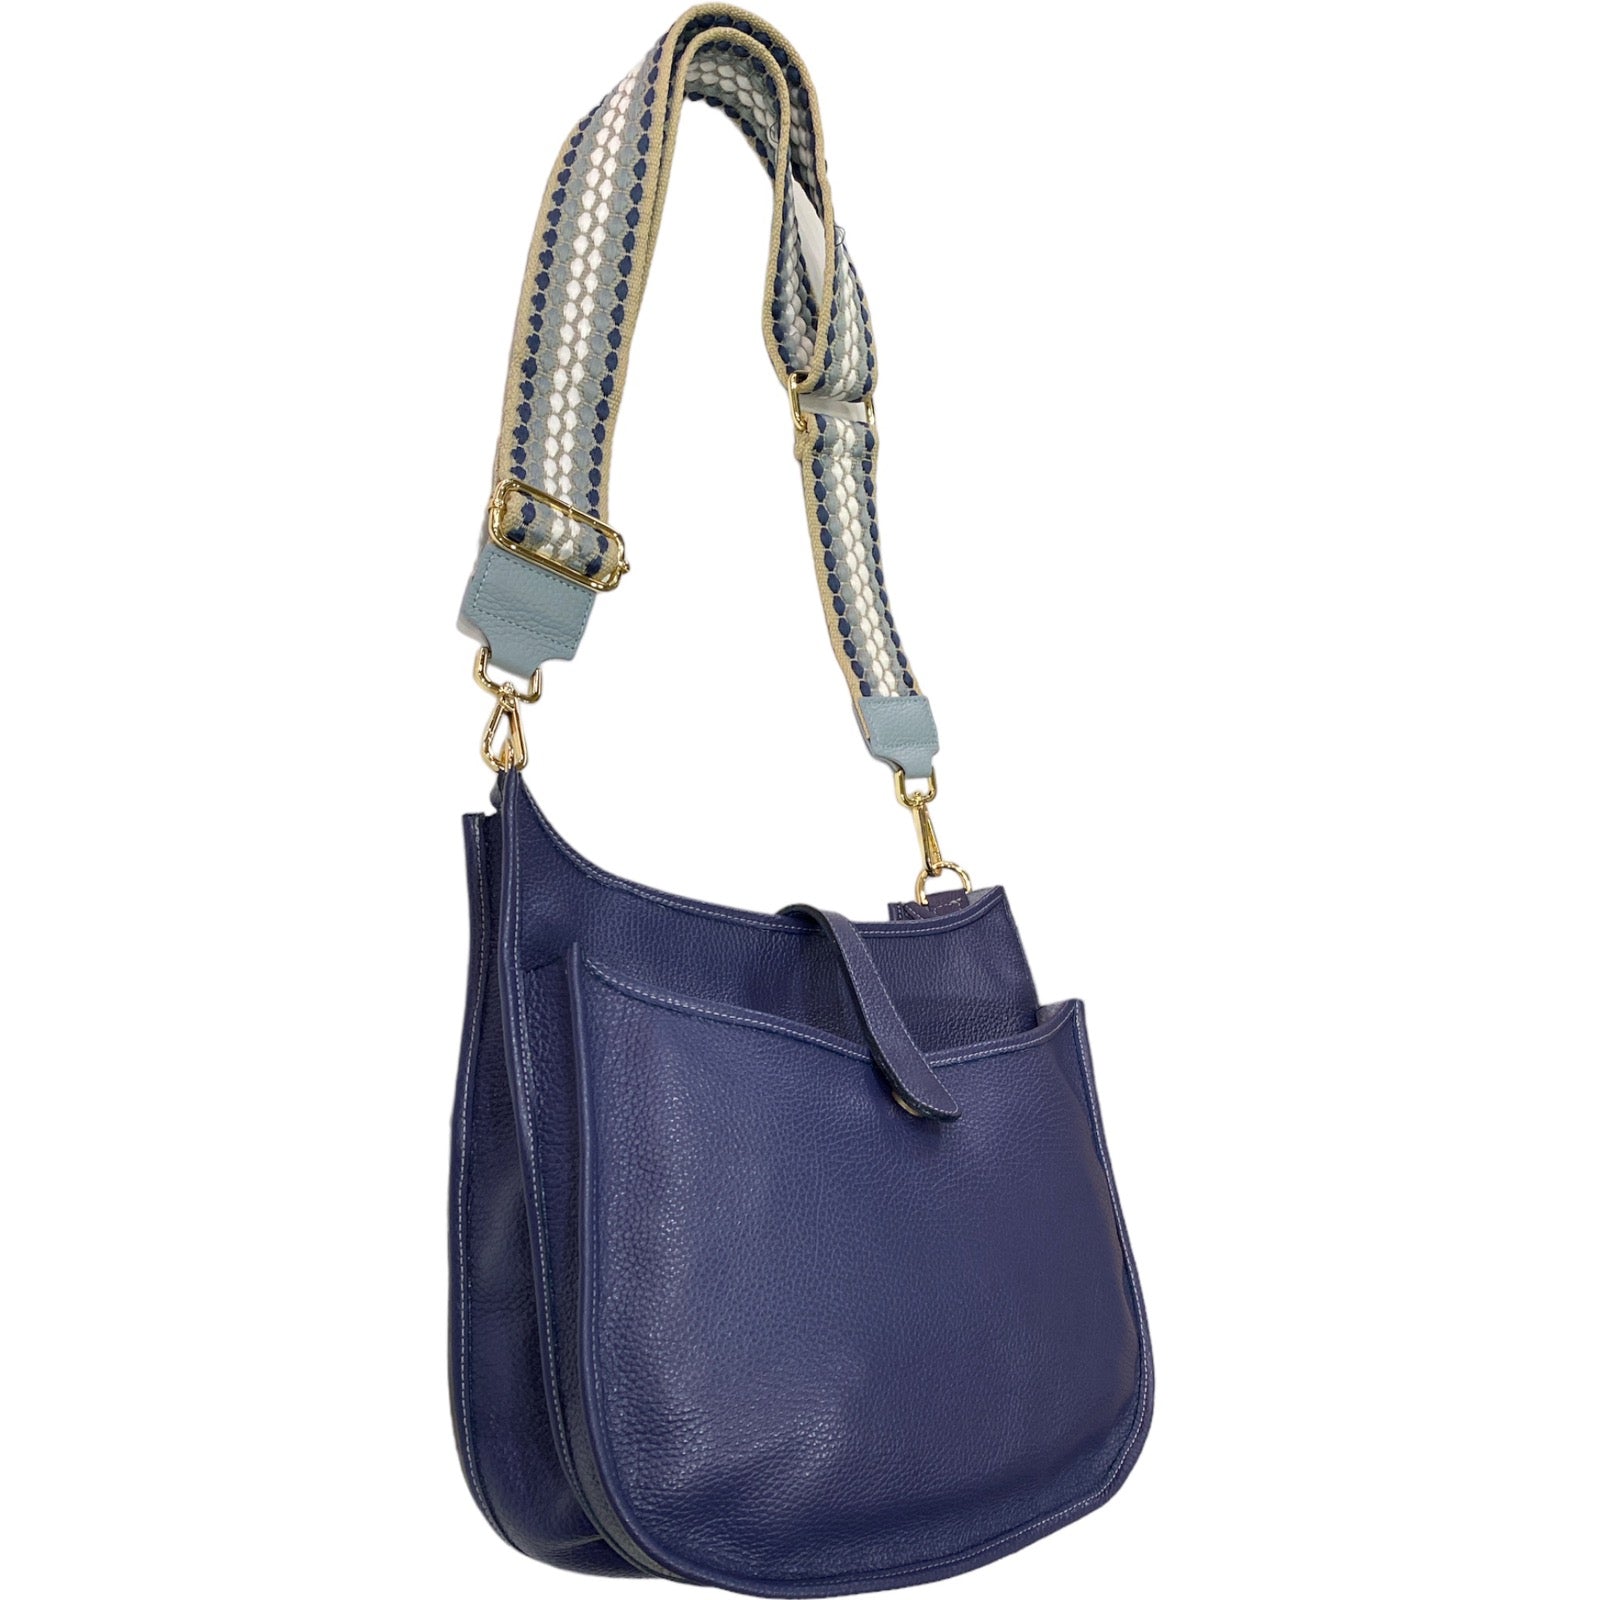 Anna. Navy blue leather messenger bag